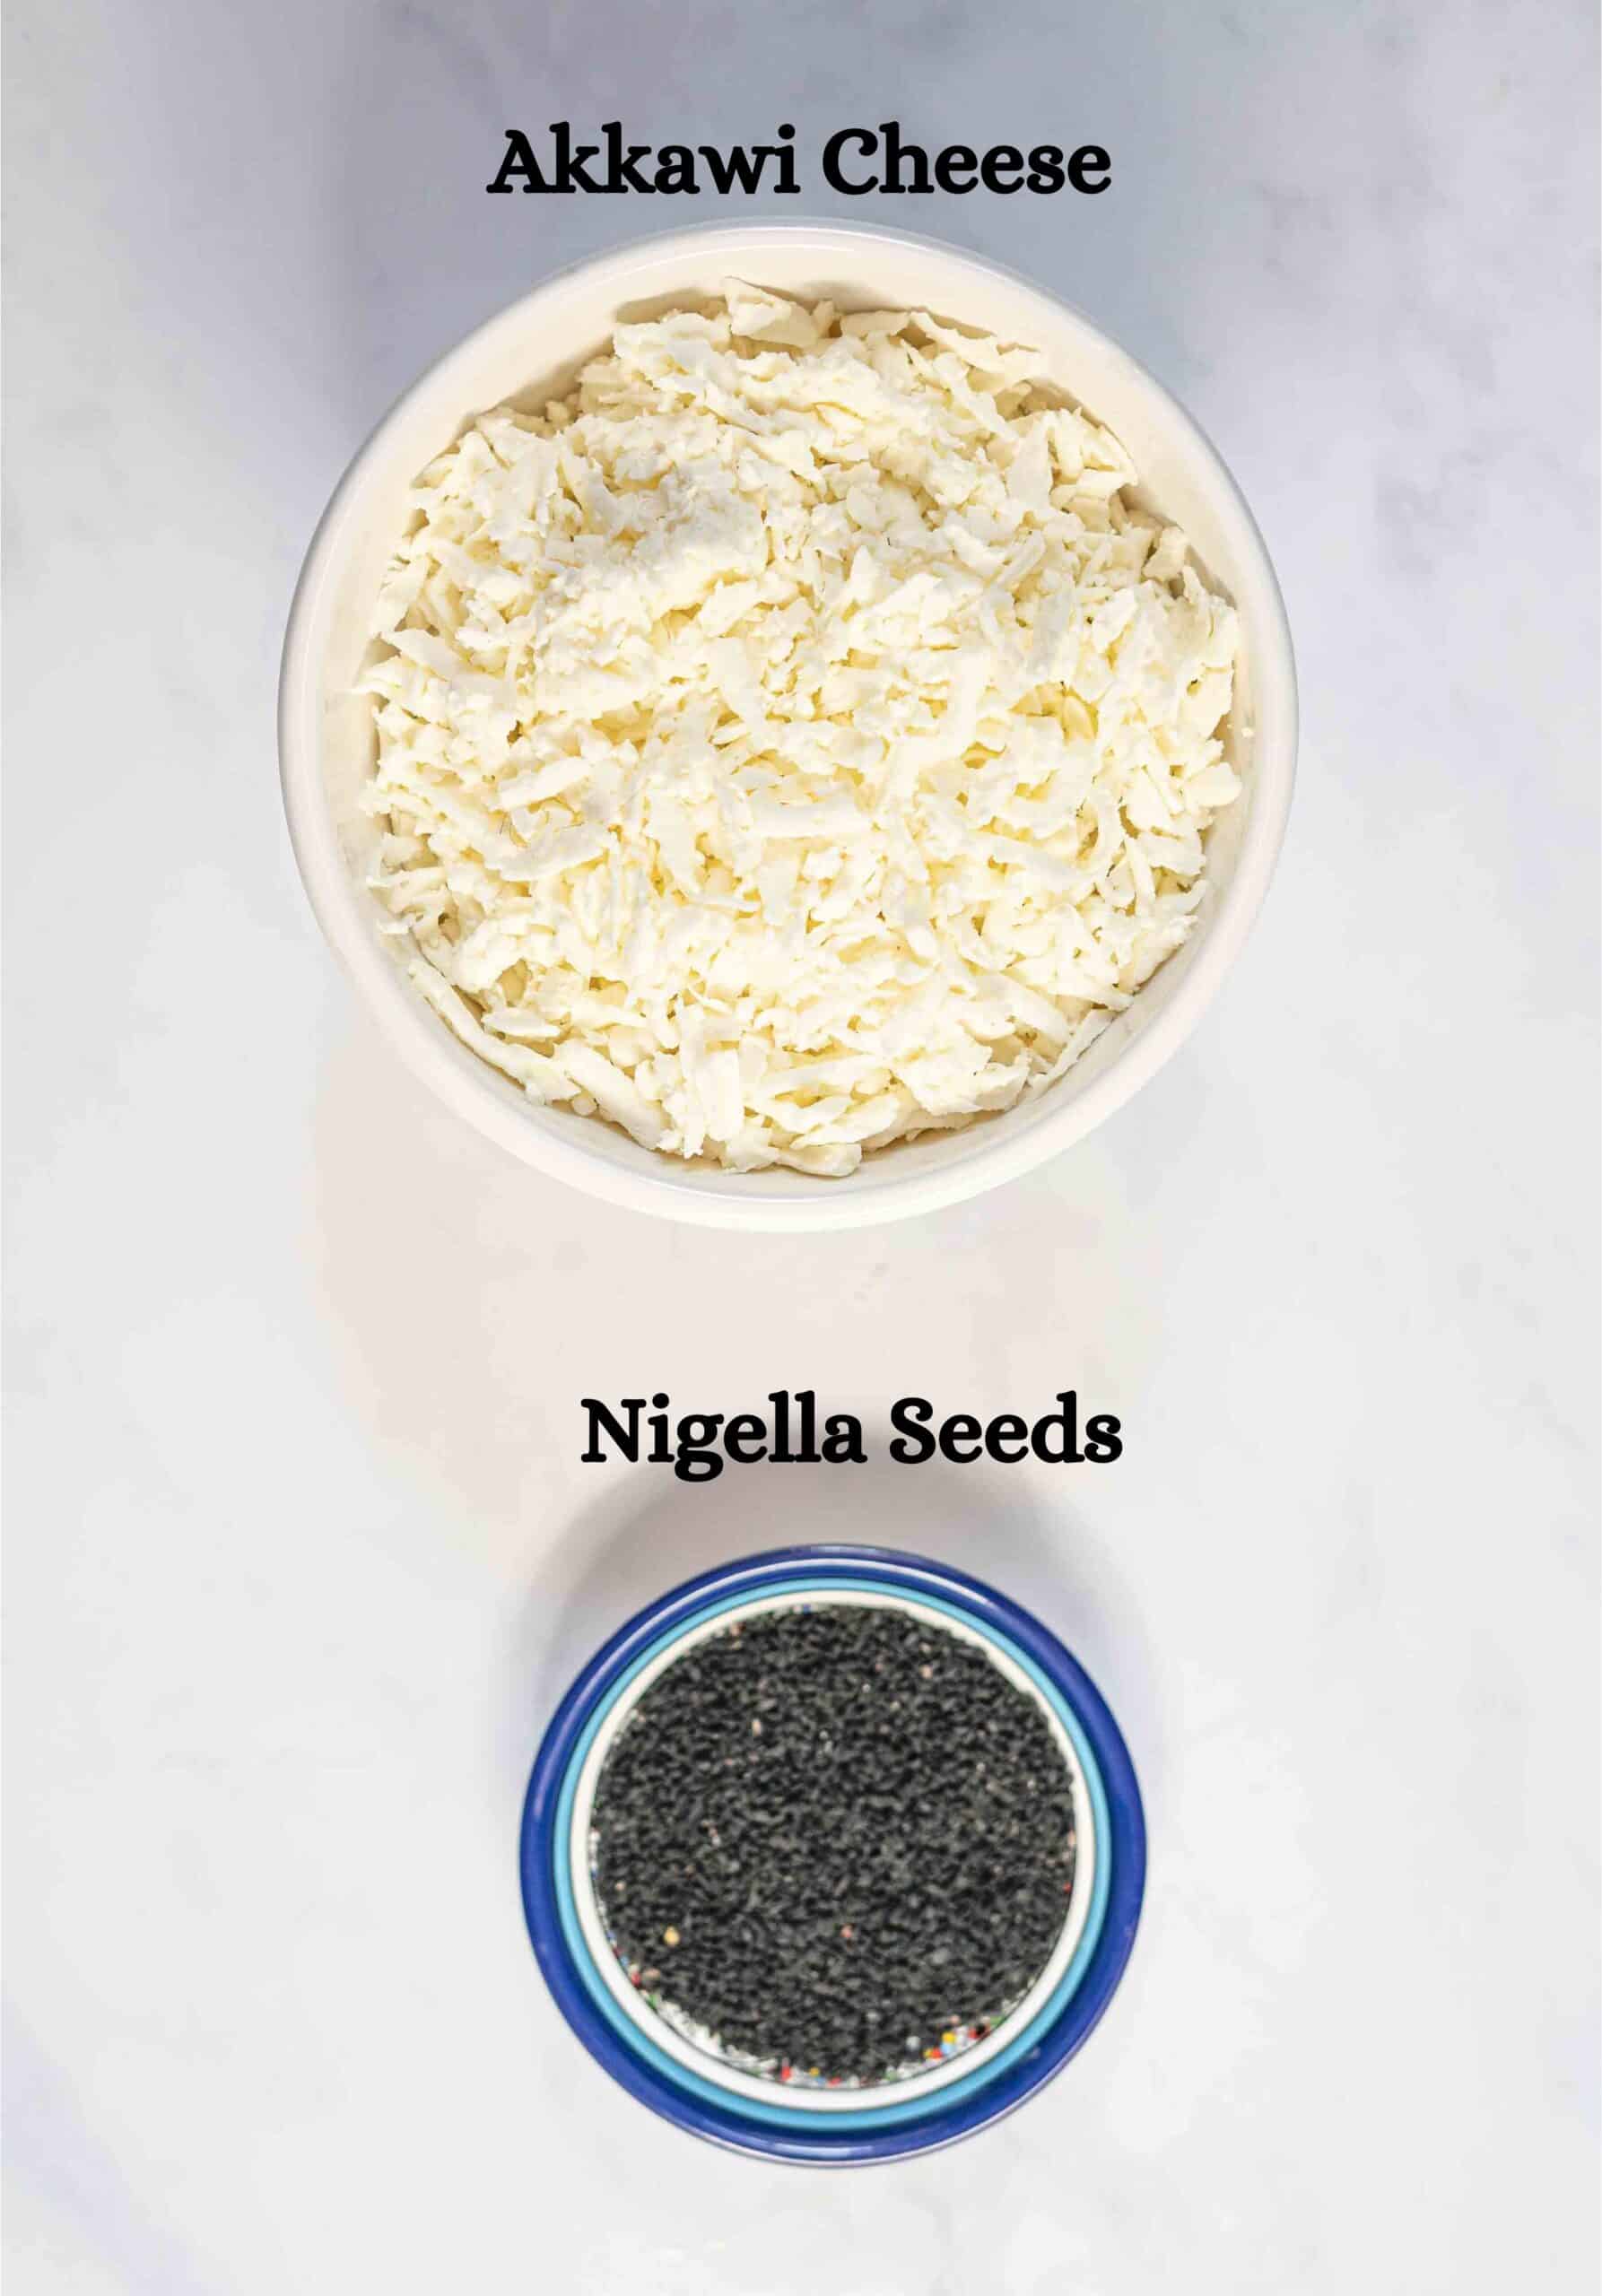 Ingredient - cheese and nigella seeds